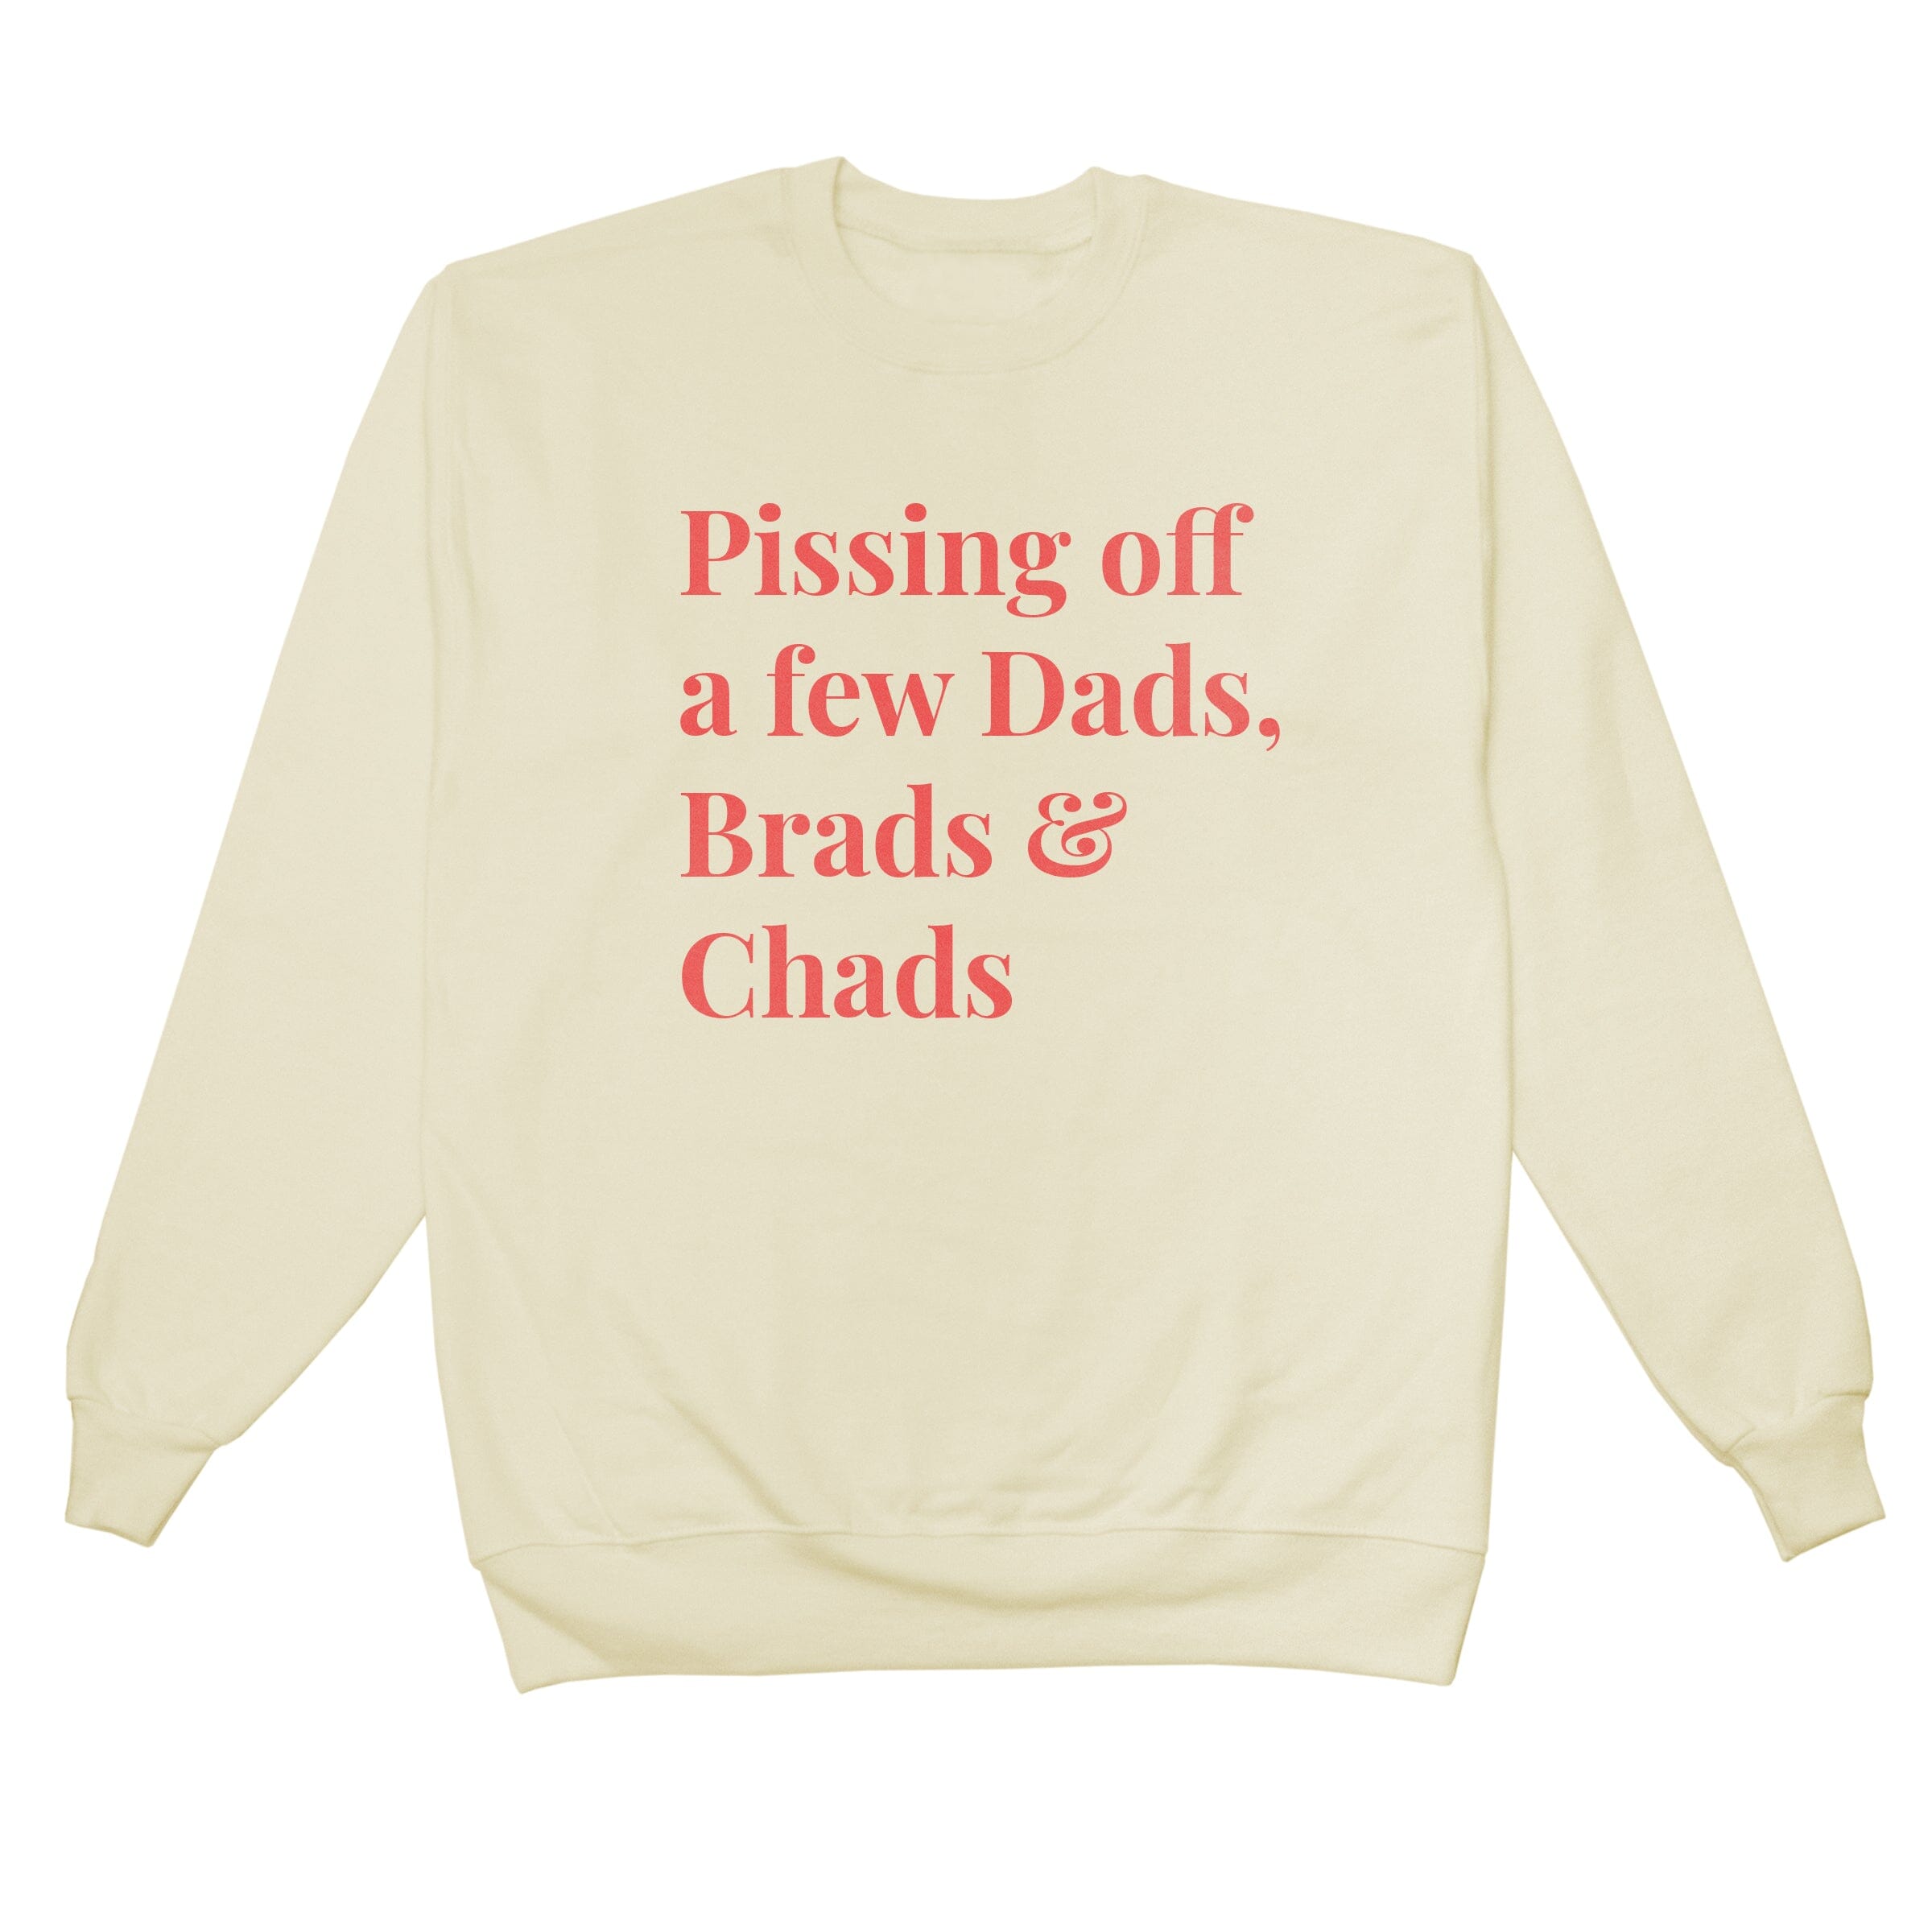 Dads, Brads and Chads